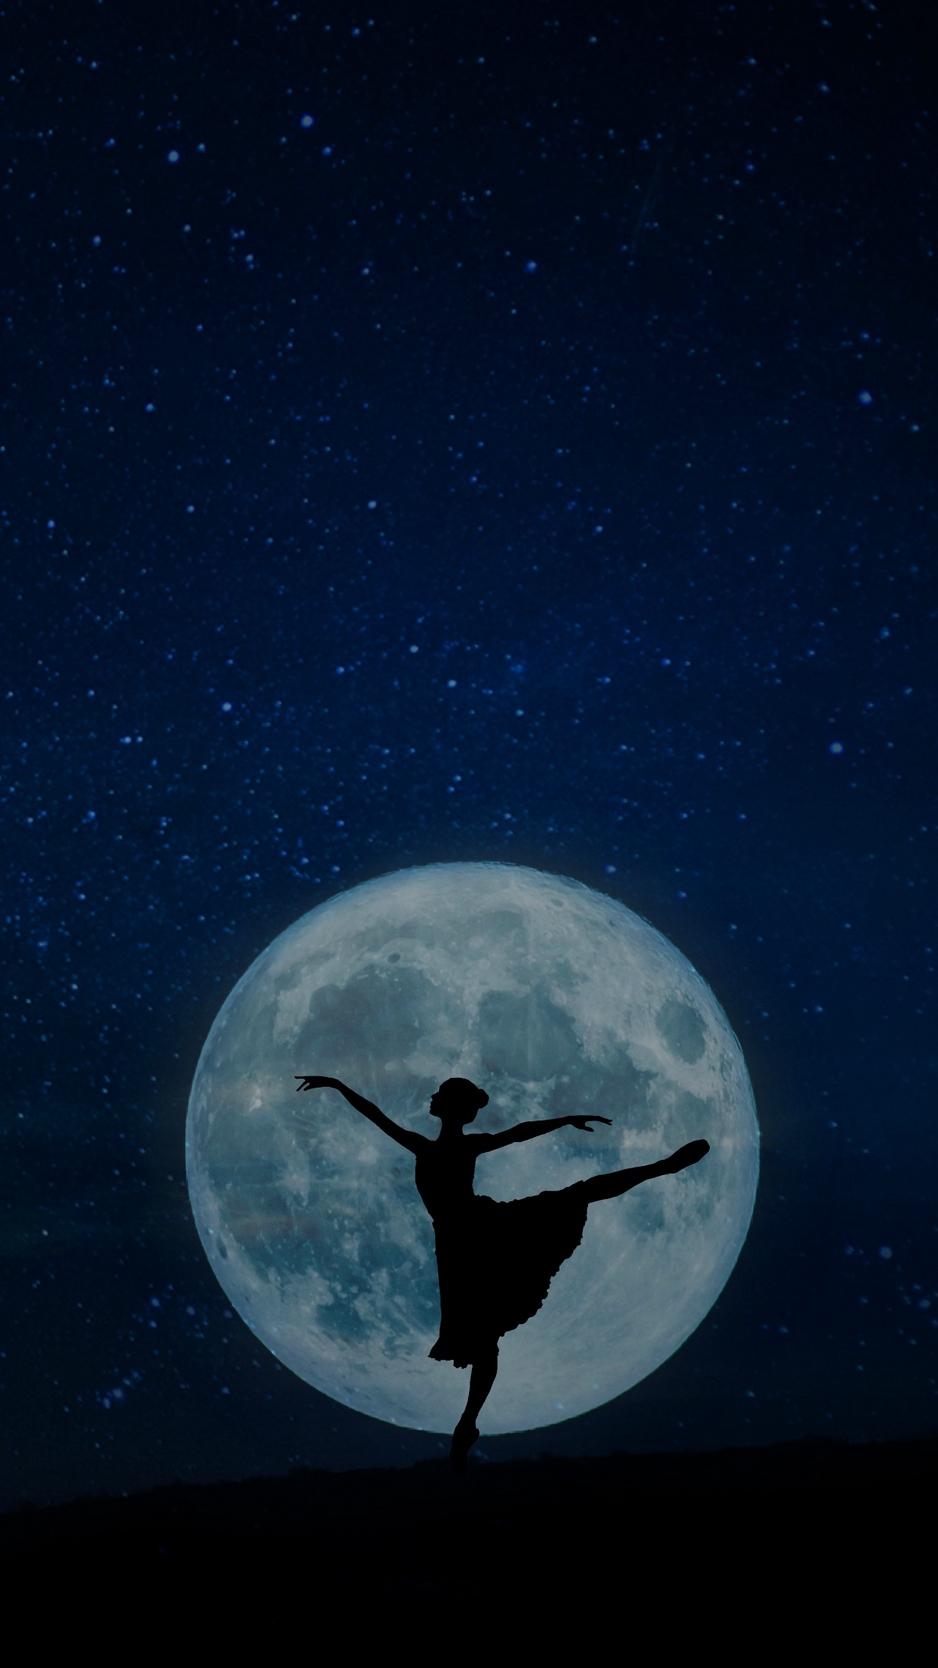 Download wallpaper 938x1668 ballerina, full moon, silhouette, starry